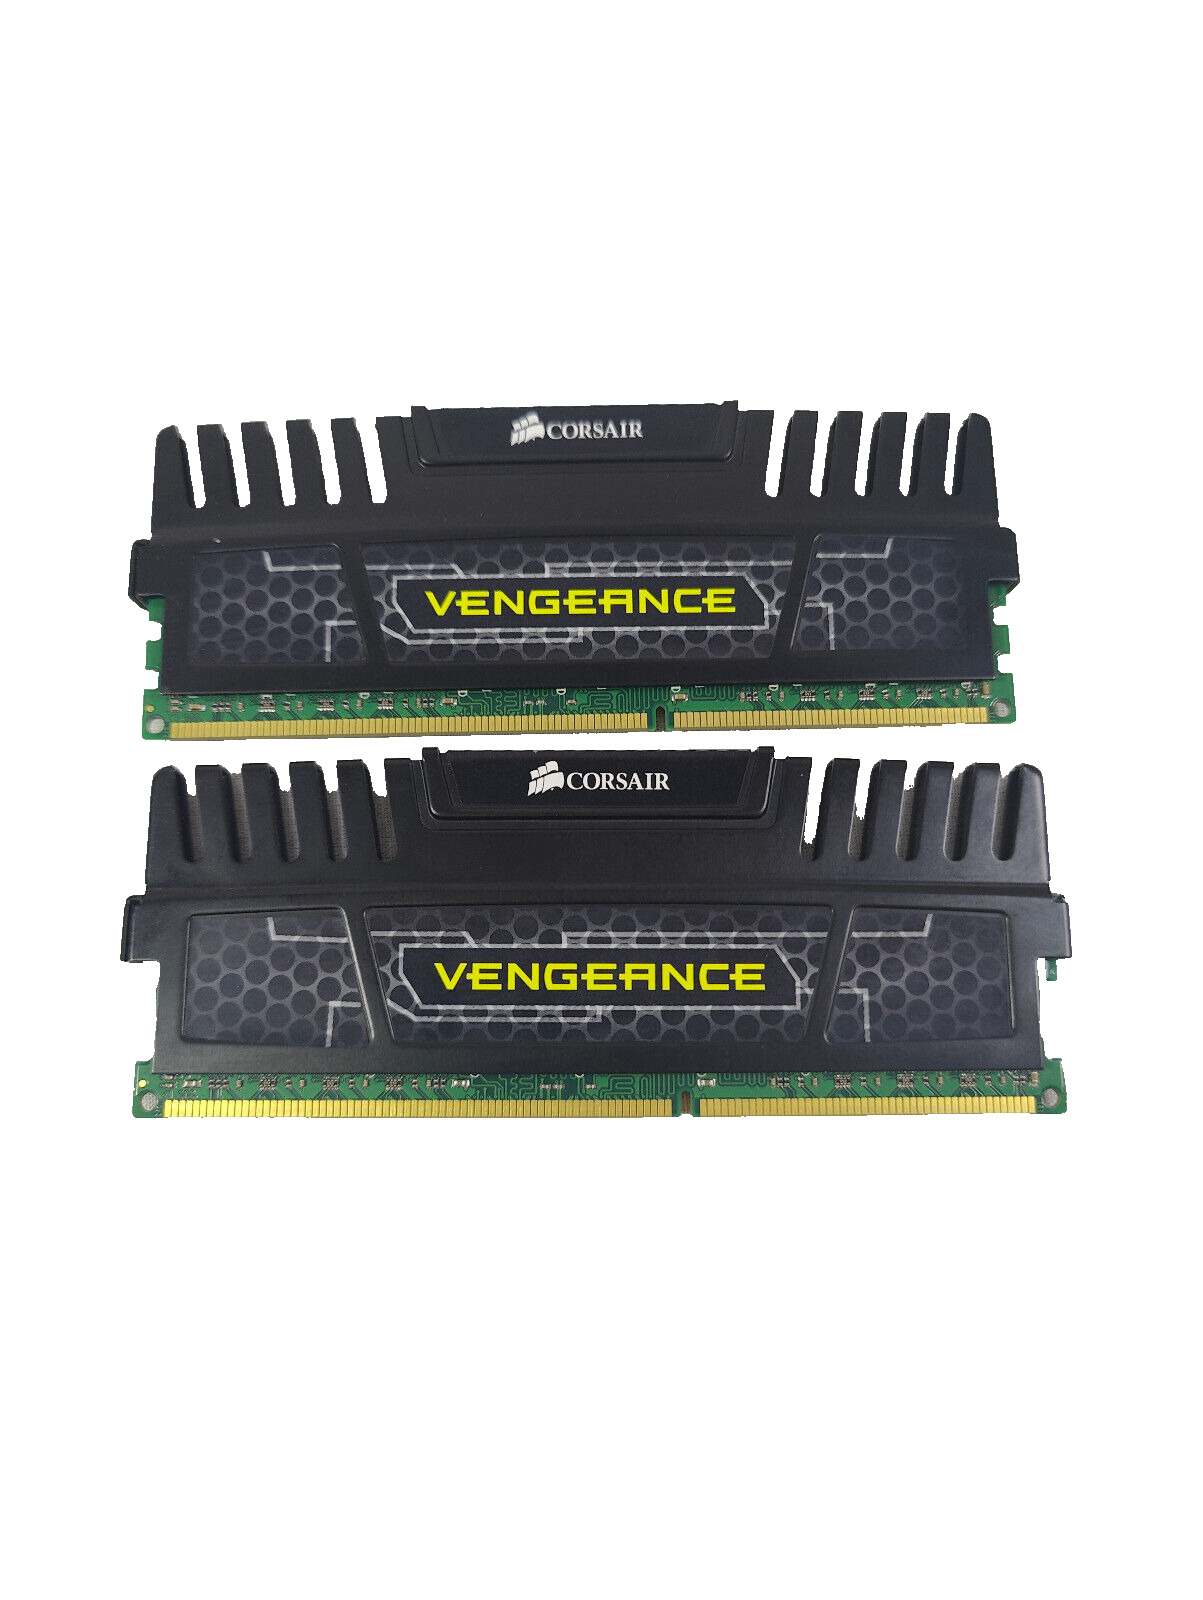 CORSAIR VENGEANCE 16GB (2x 8GB) DDR3-1600MHz PC3-12800 1.5V Memory RAM 